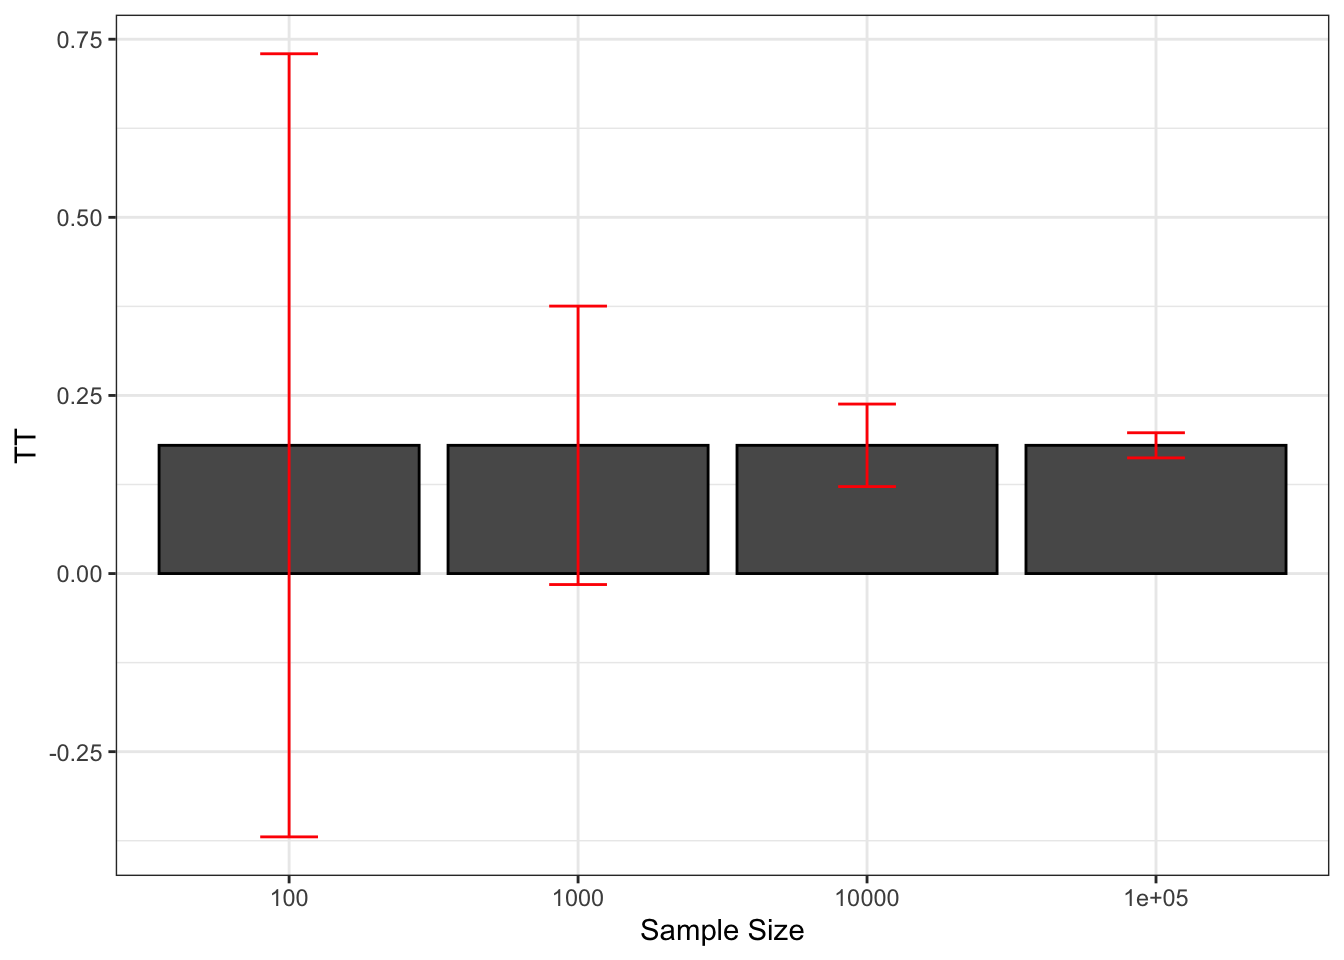 Sampling noise of $\hat{WW}$ (99\% confidence) around $TT$ for various sample sizes